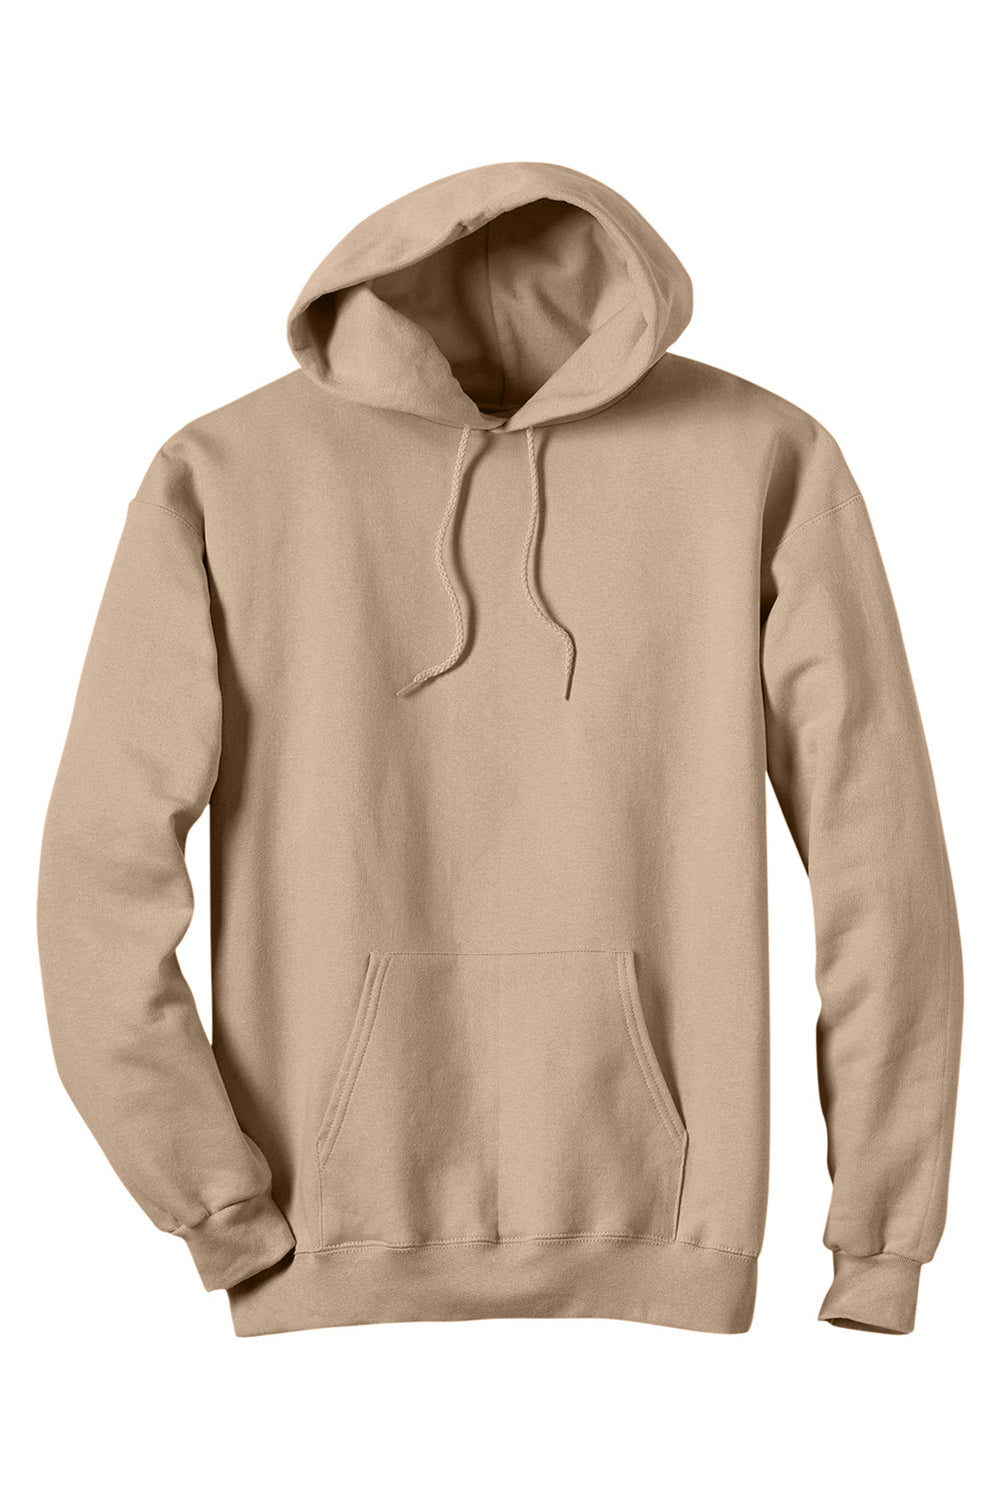 Hanes F170, Ultimate Cotton ® - Pullover Hooded Sweatshirt